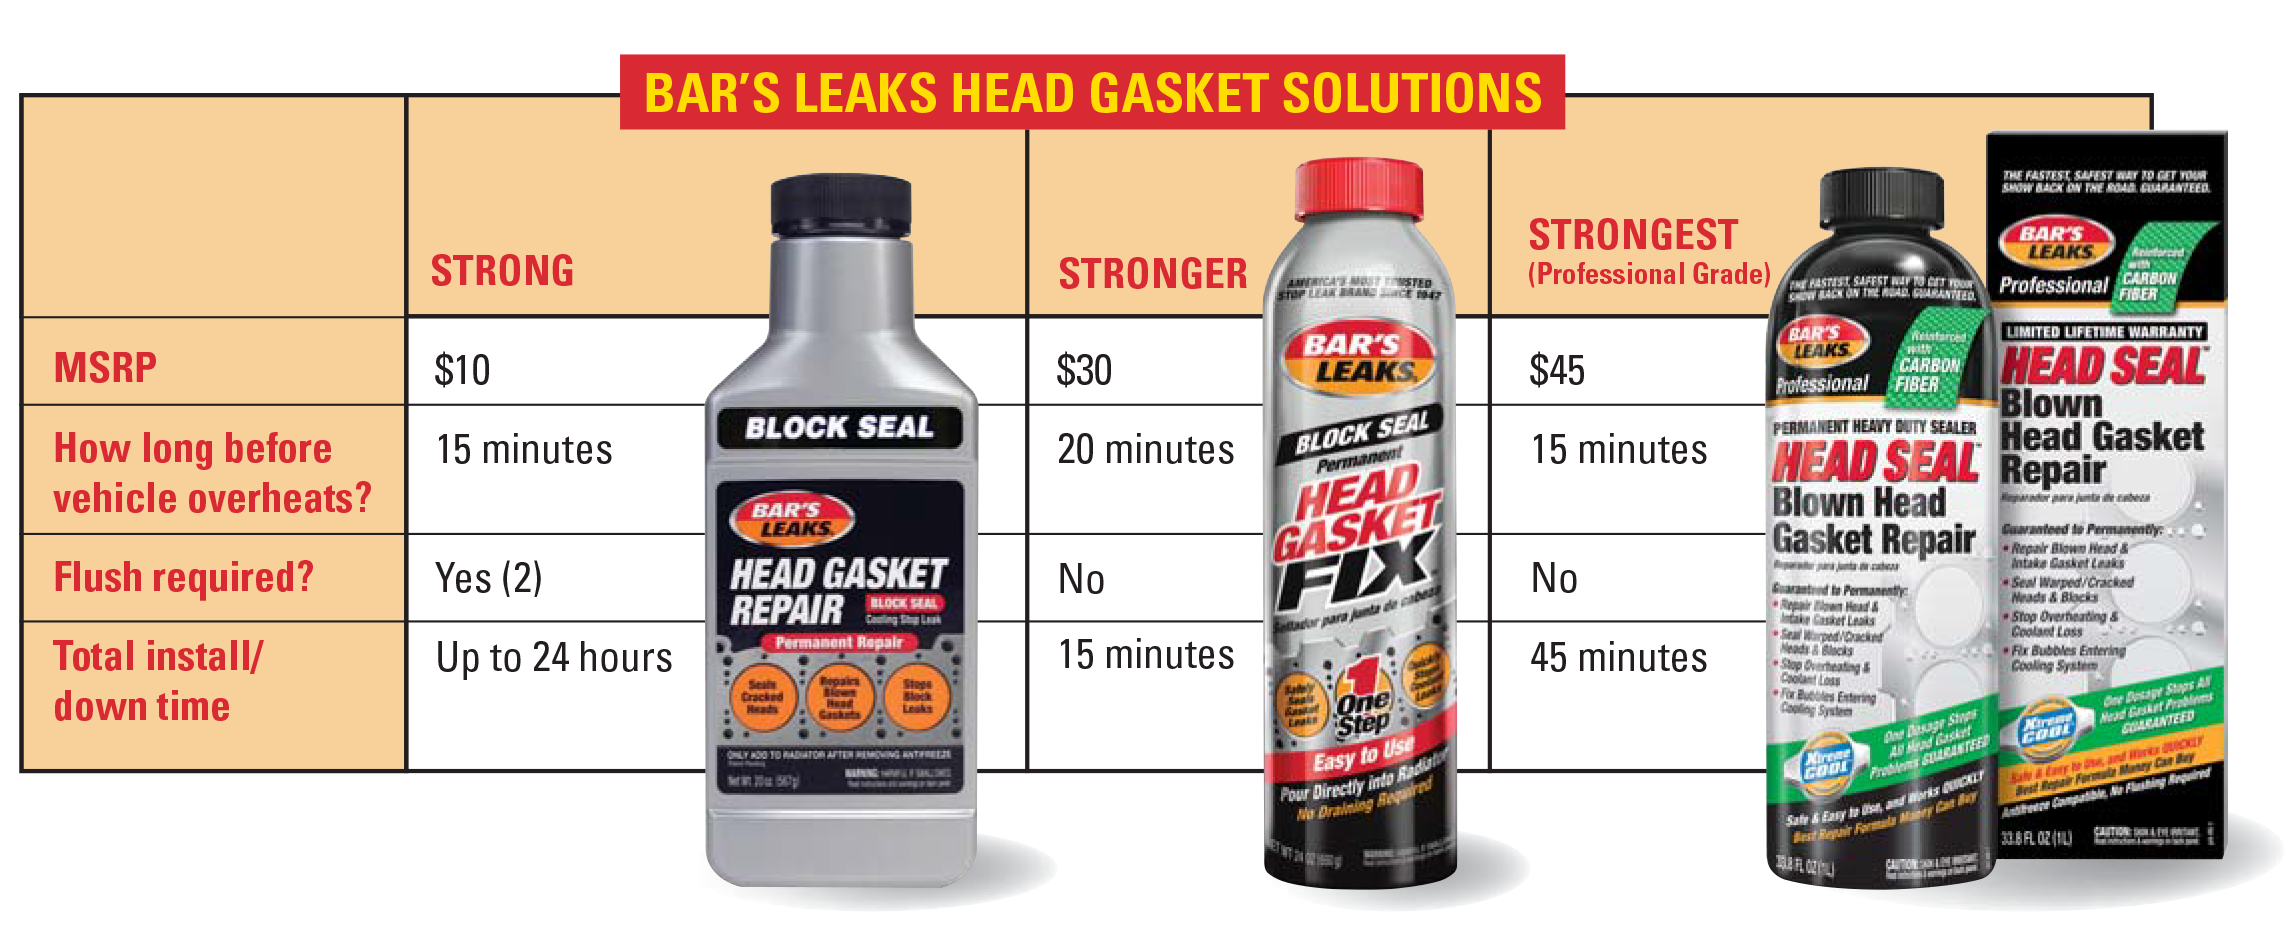 Bars Leaks Block Seal Head Gasket Fix 24 Oz Ph